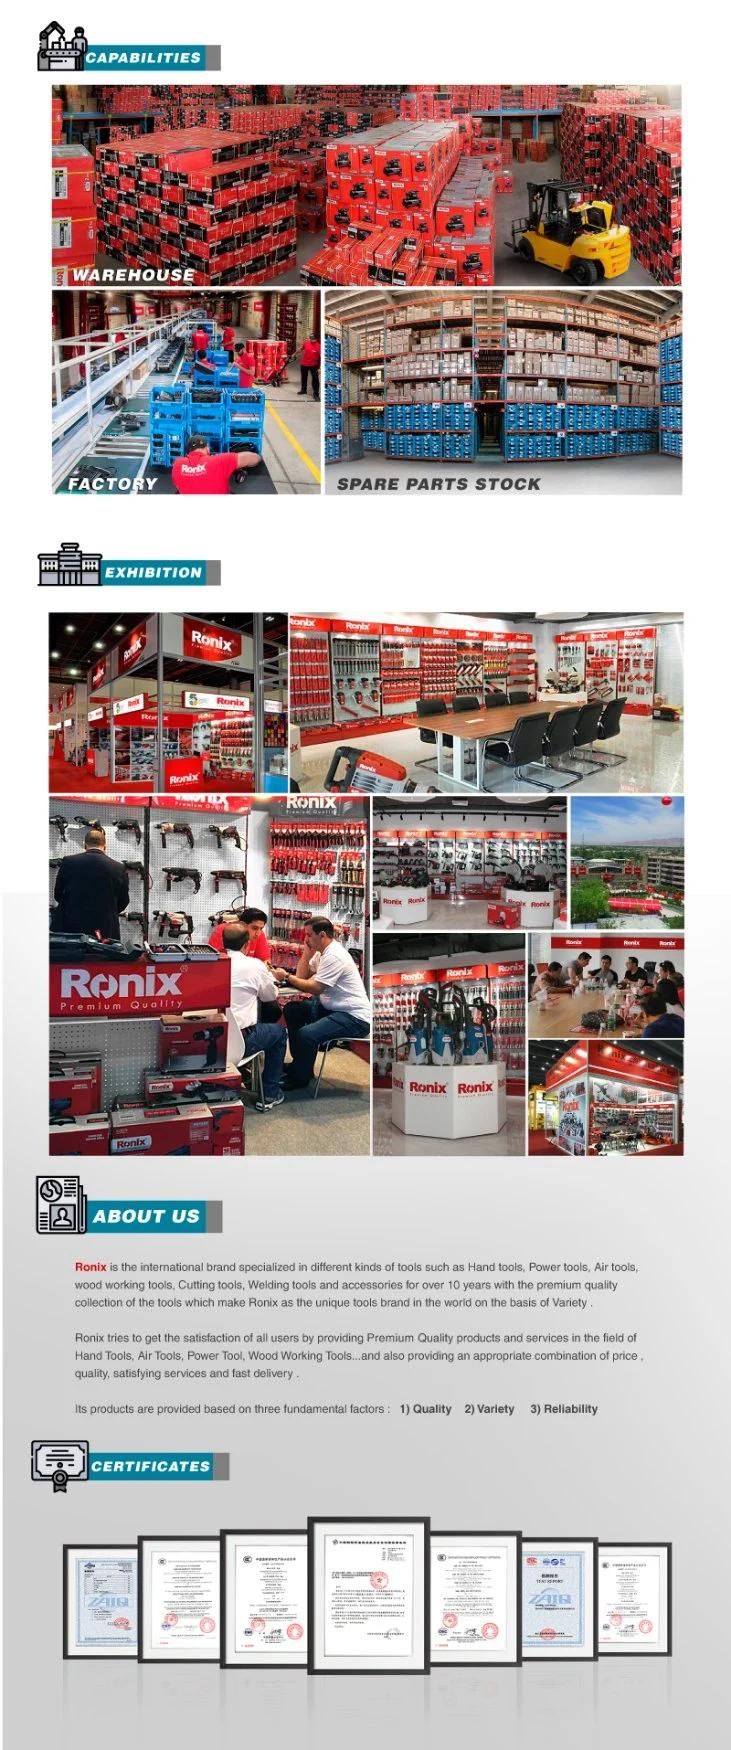 Ronix Hand Tool Set Model Rh-2701 Mini Portable 7PCS Colorline Precision Screwdriver Bit Set